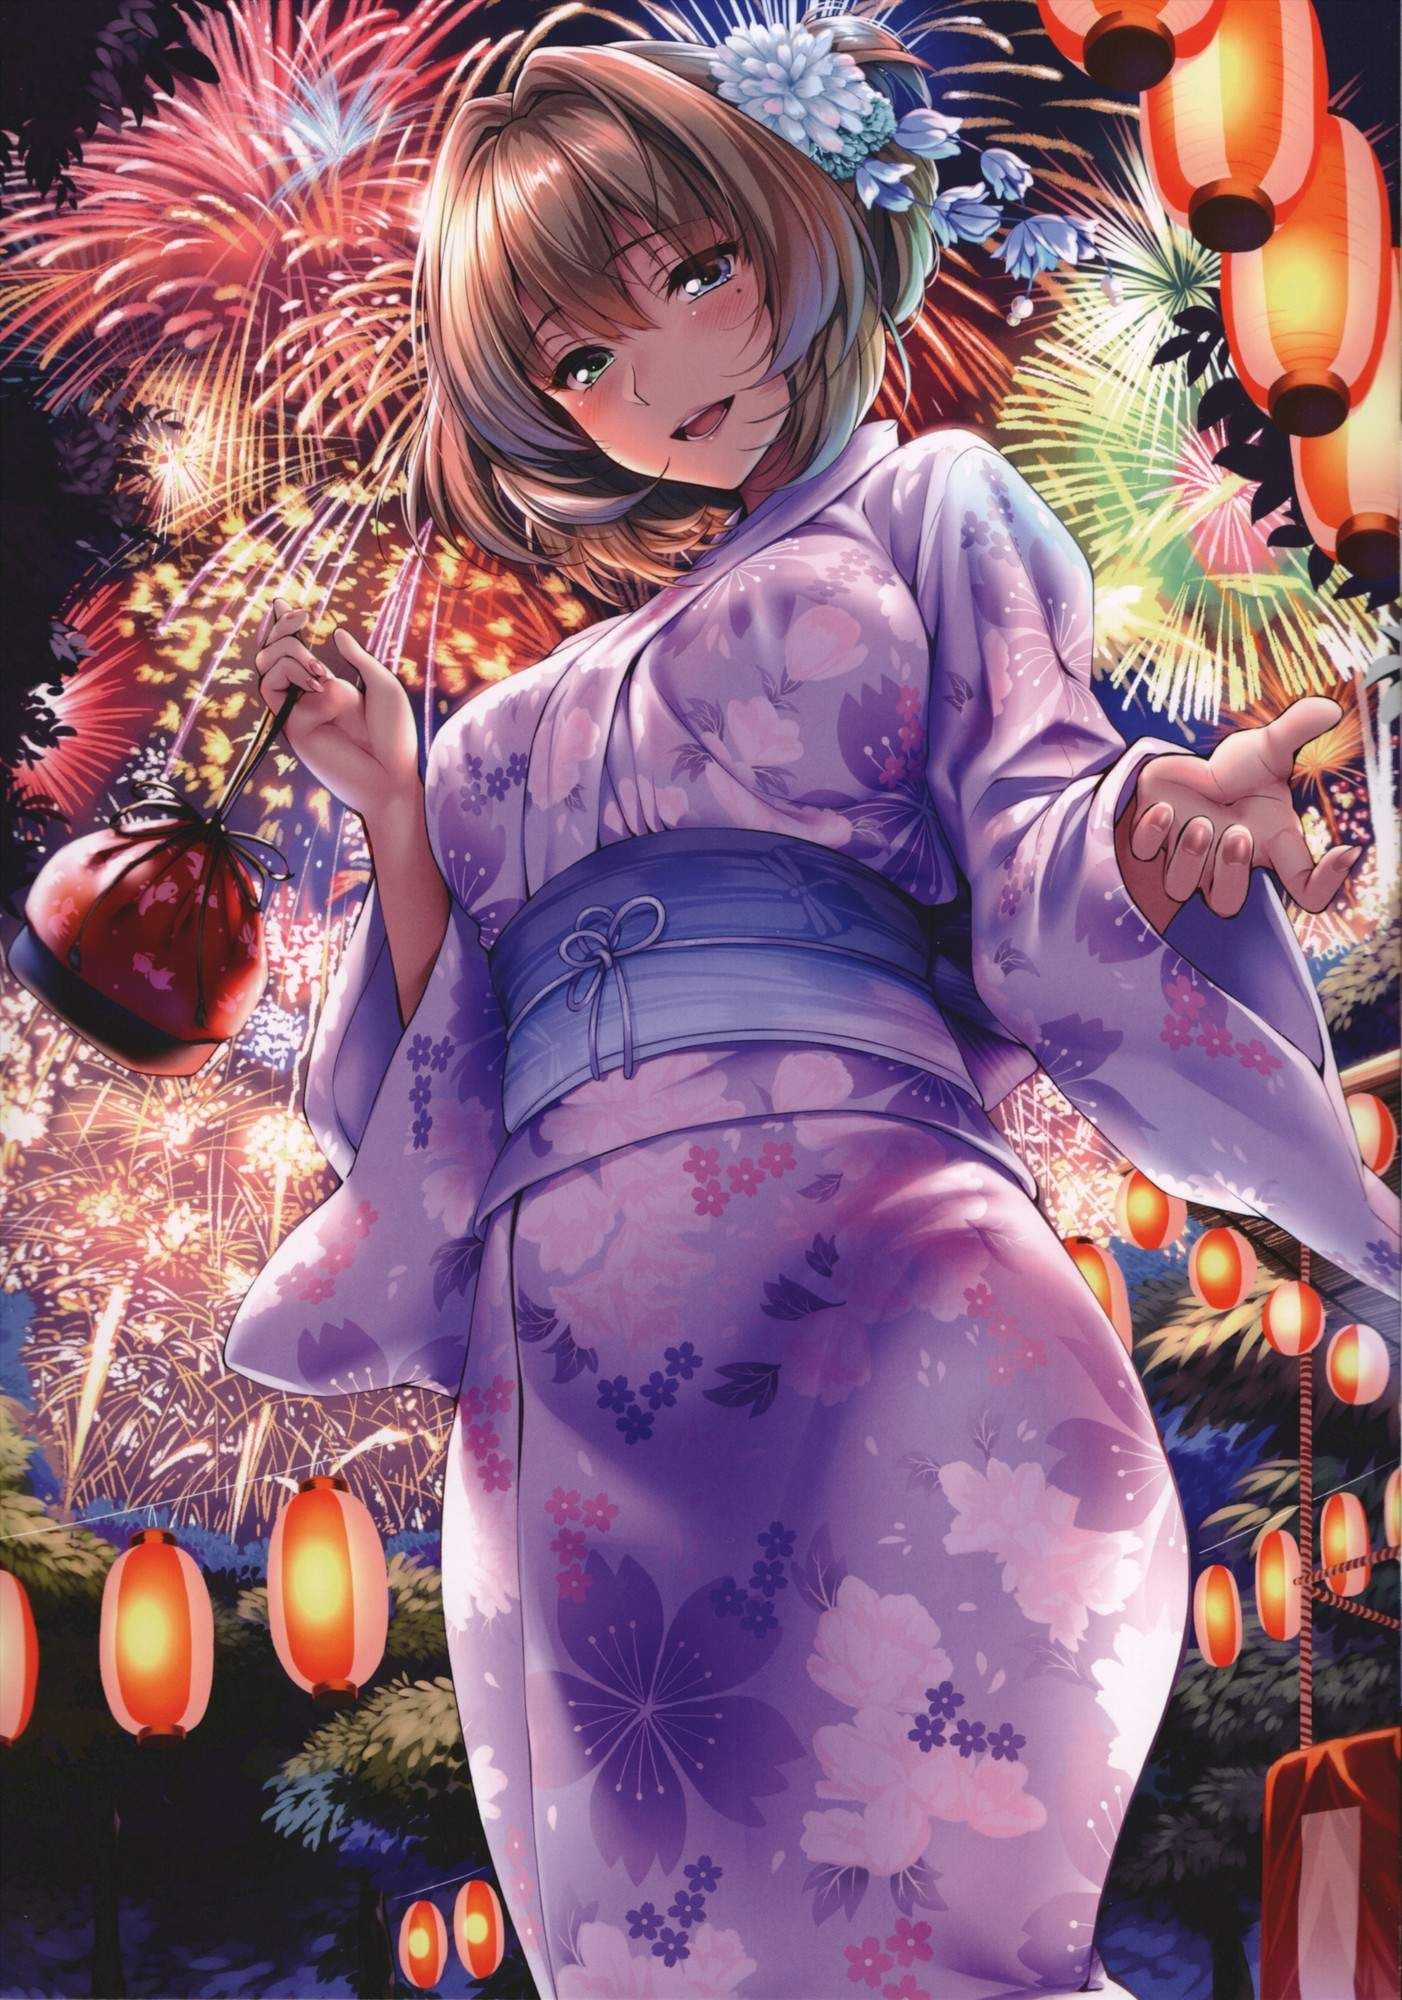 Summary of erotic images of Kimono and Yukata! 20